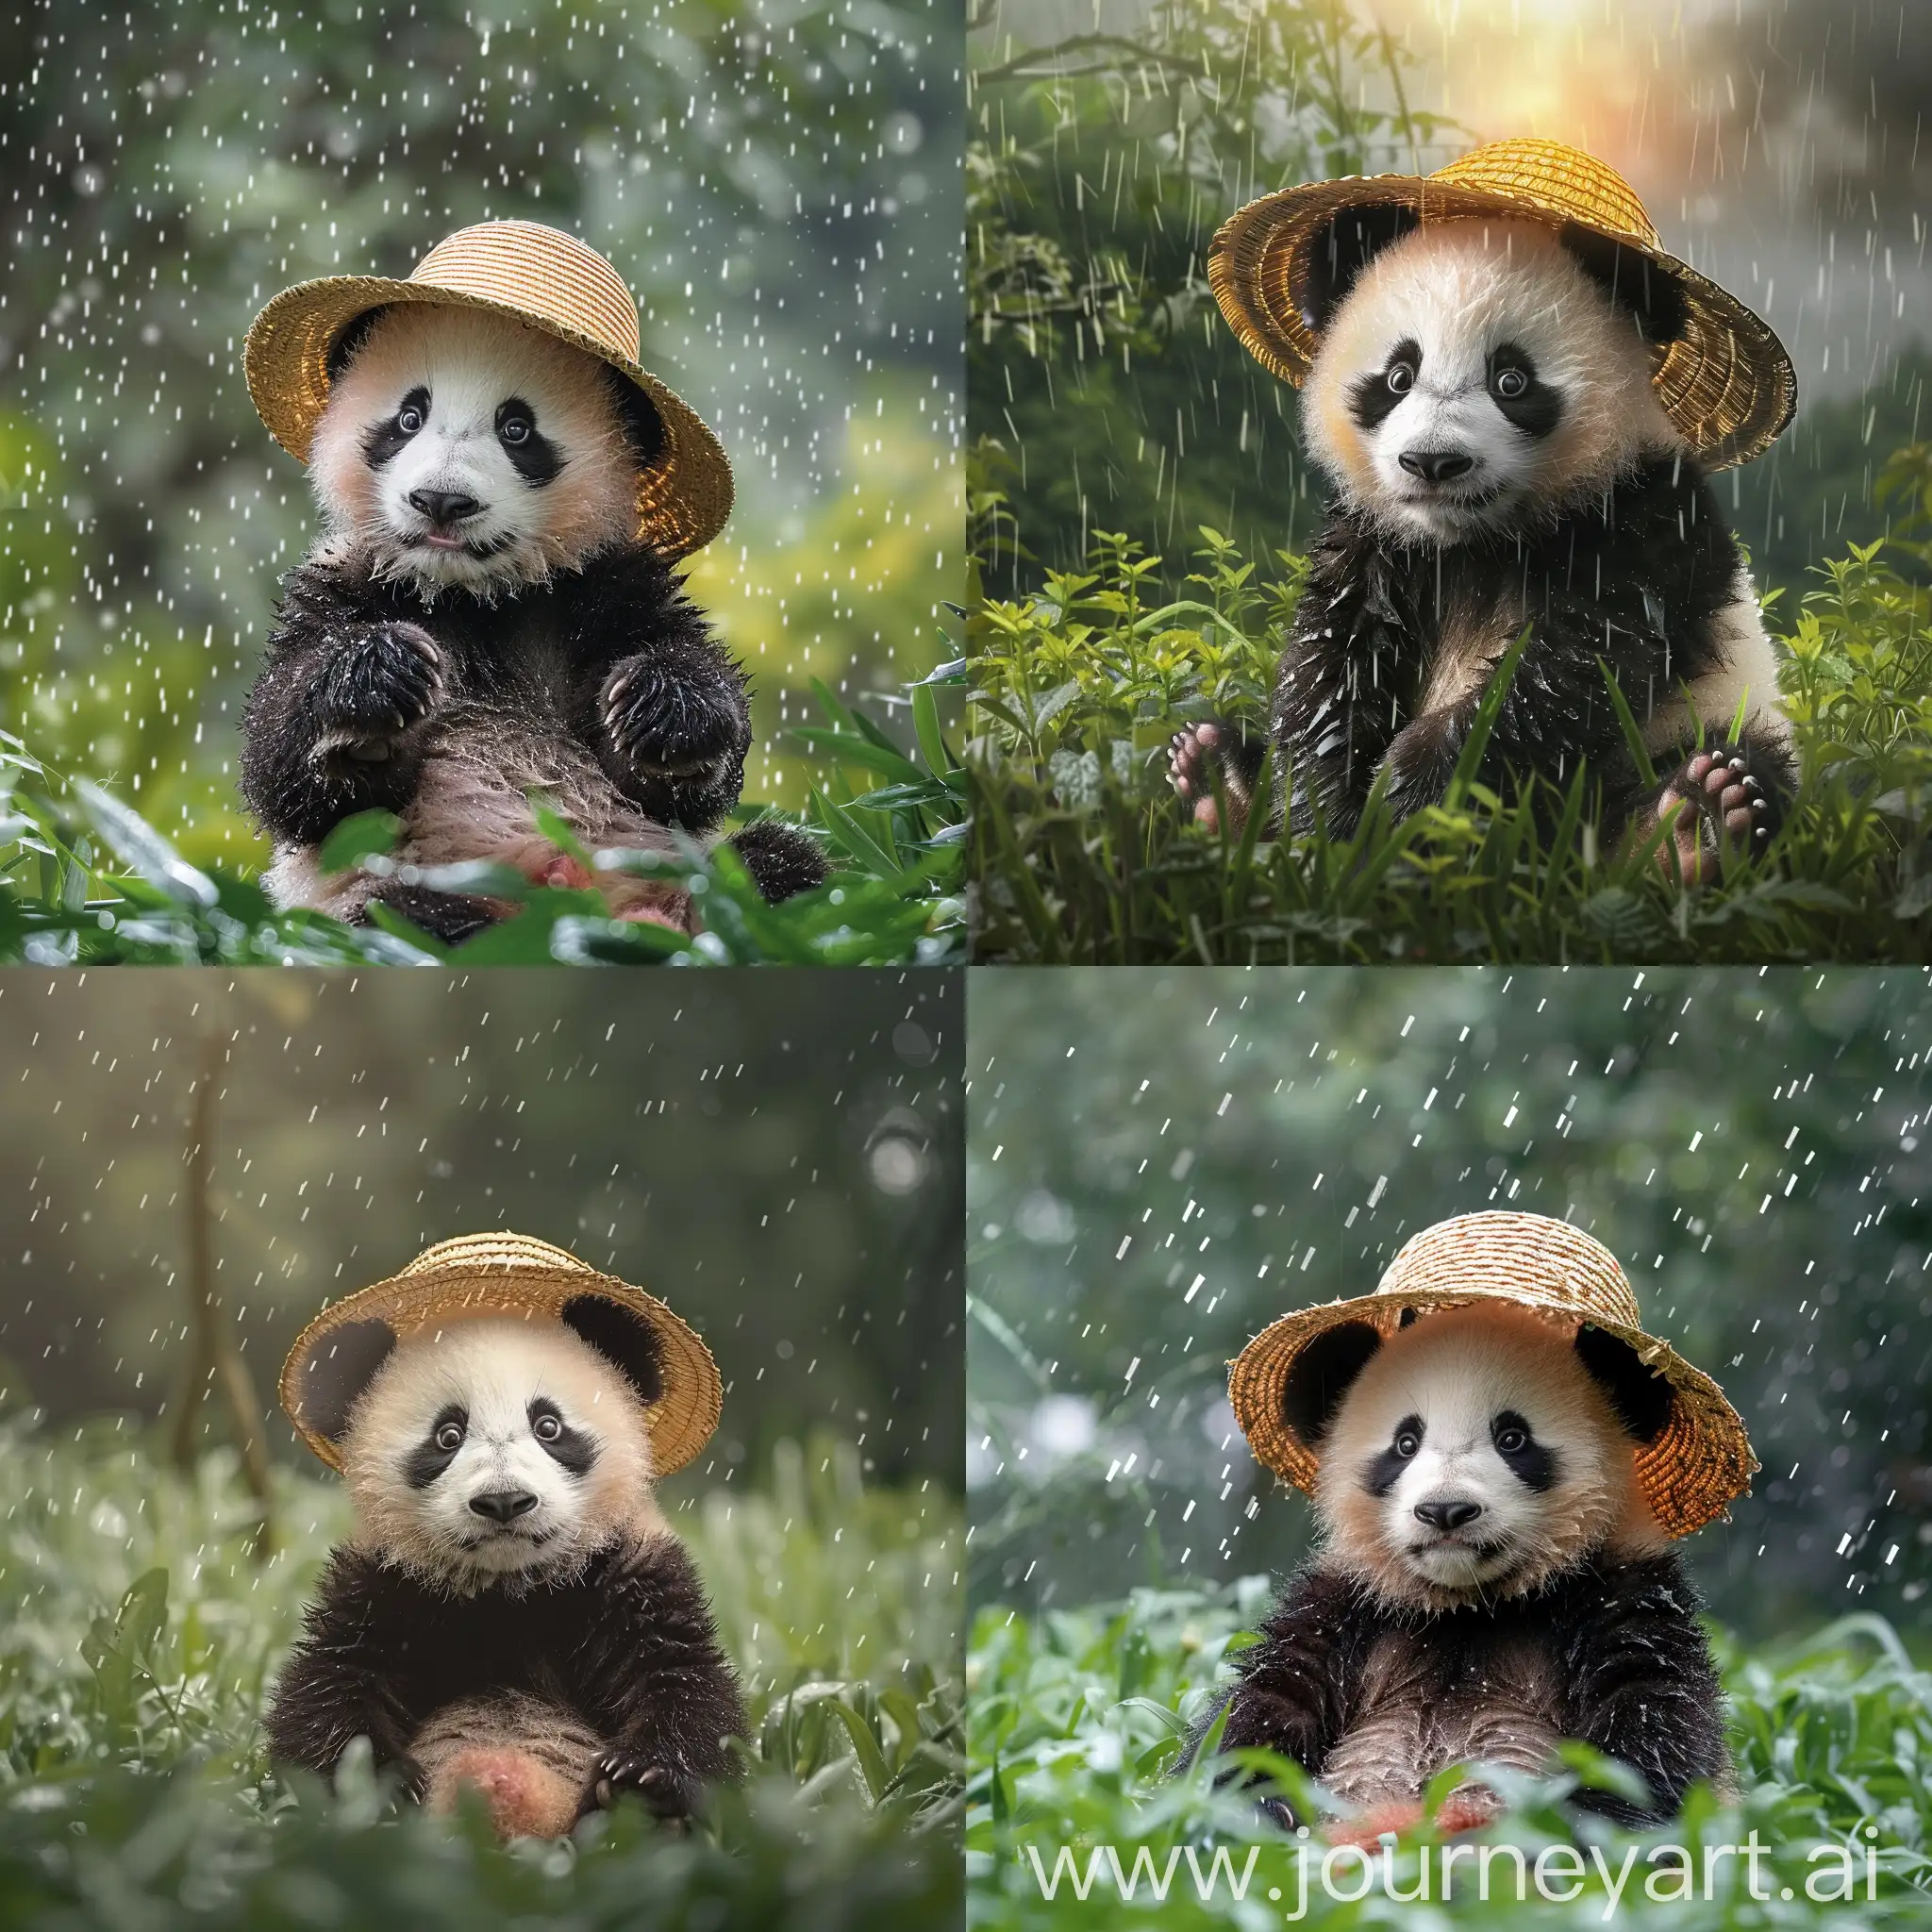 Adorable-Baby-Panda-with-Straw-Hat-Enjoying-a-Refreshing-Rain-in-Lush-Green-Field